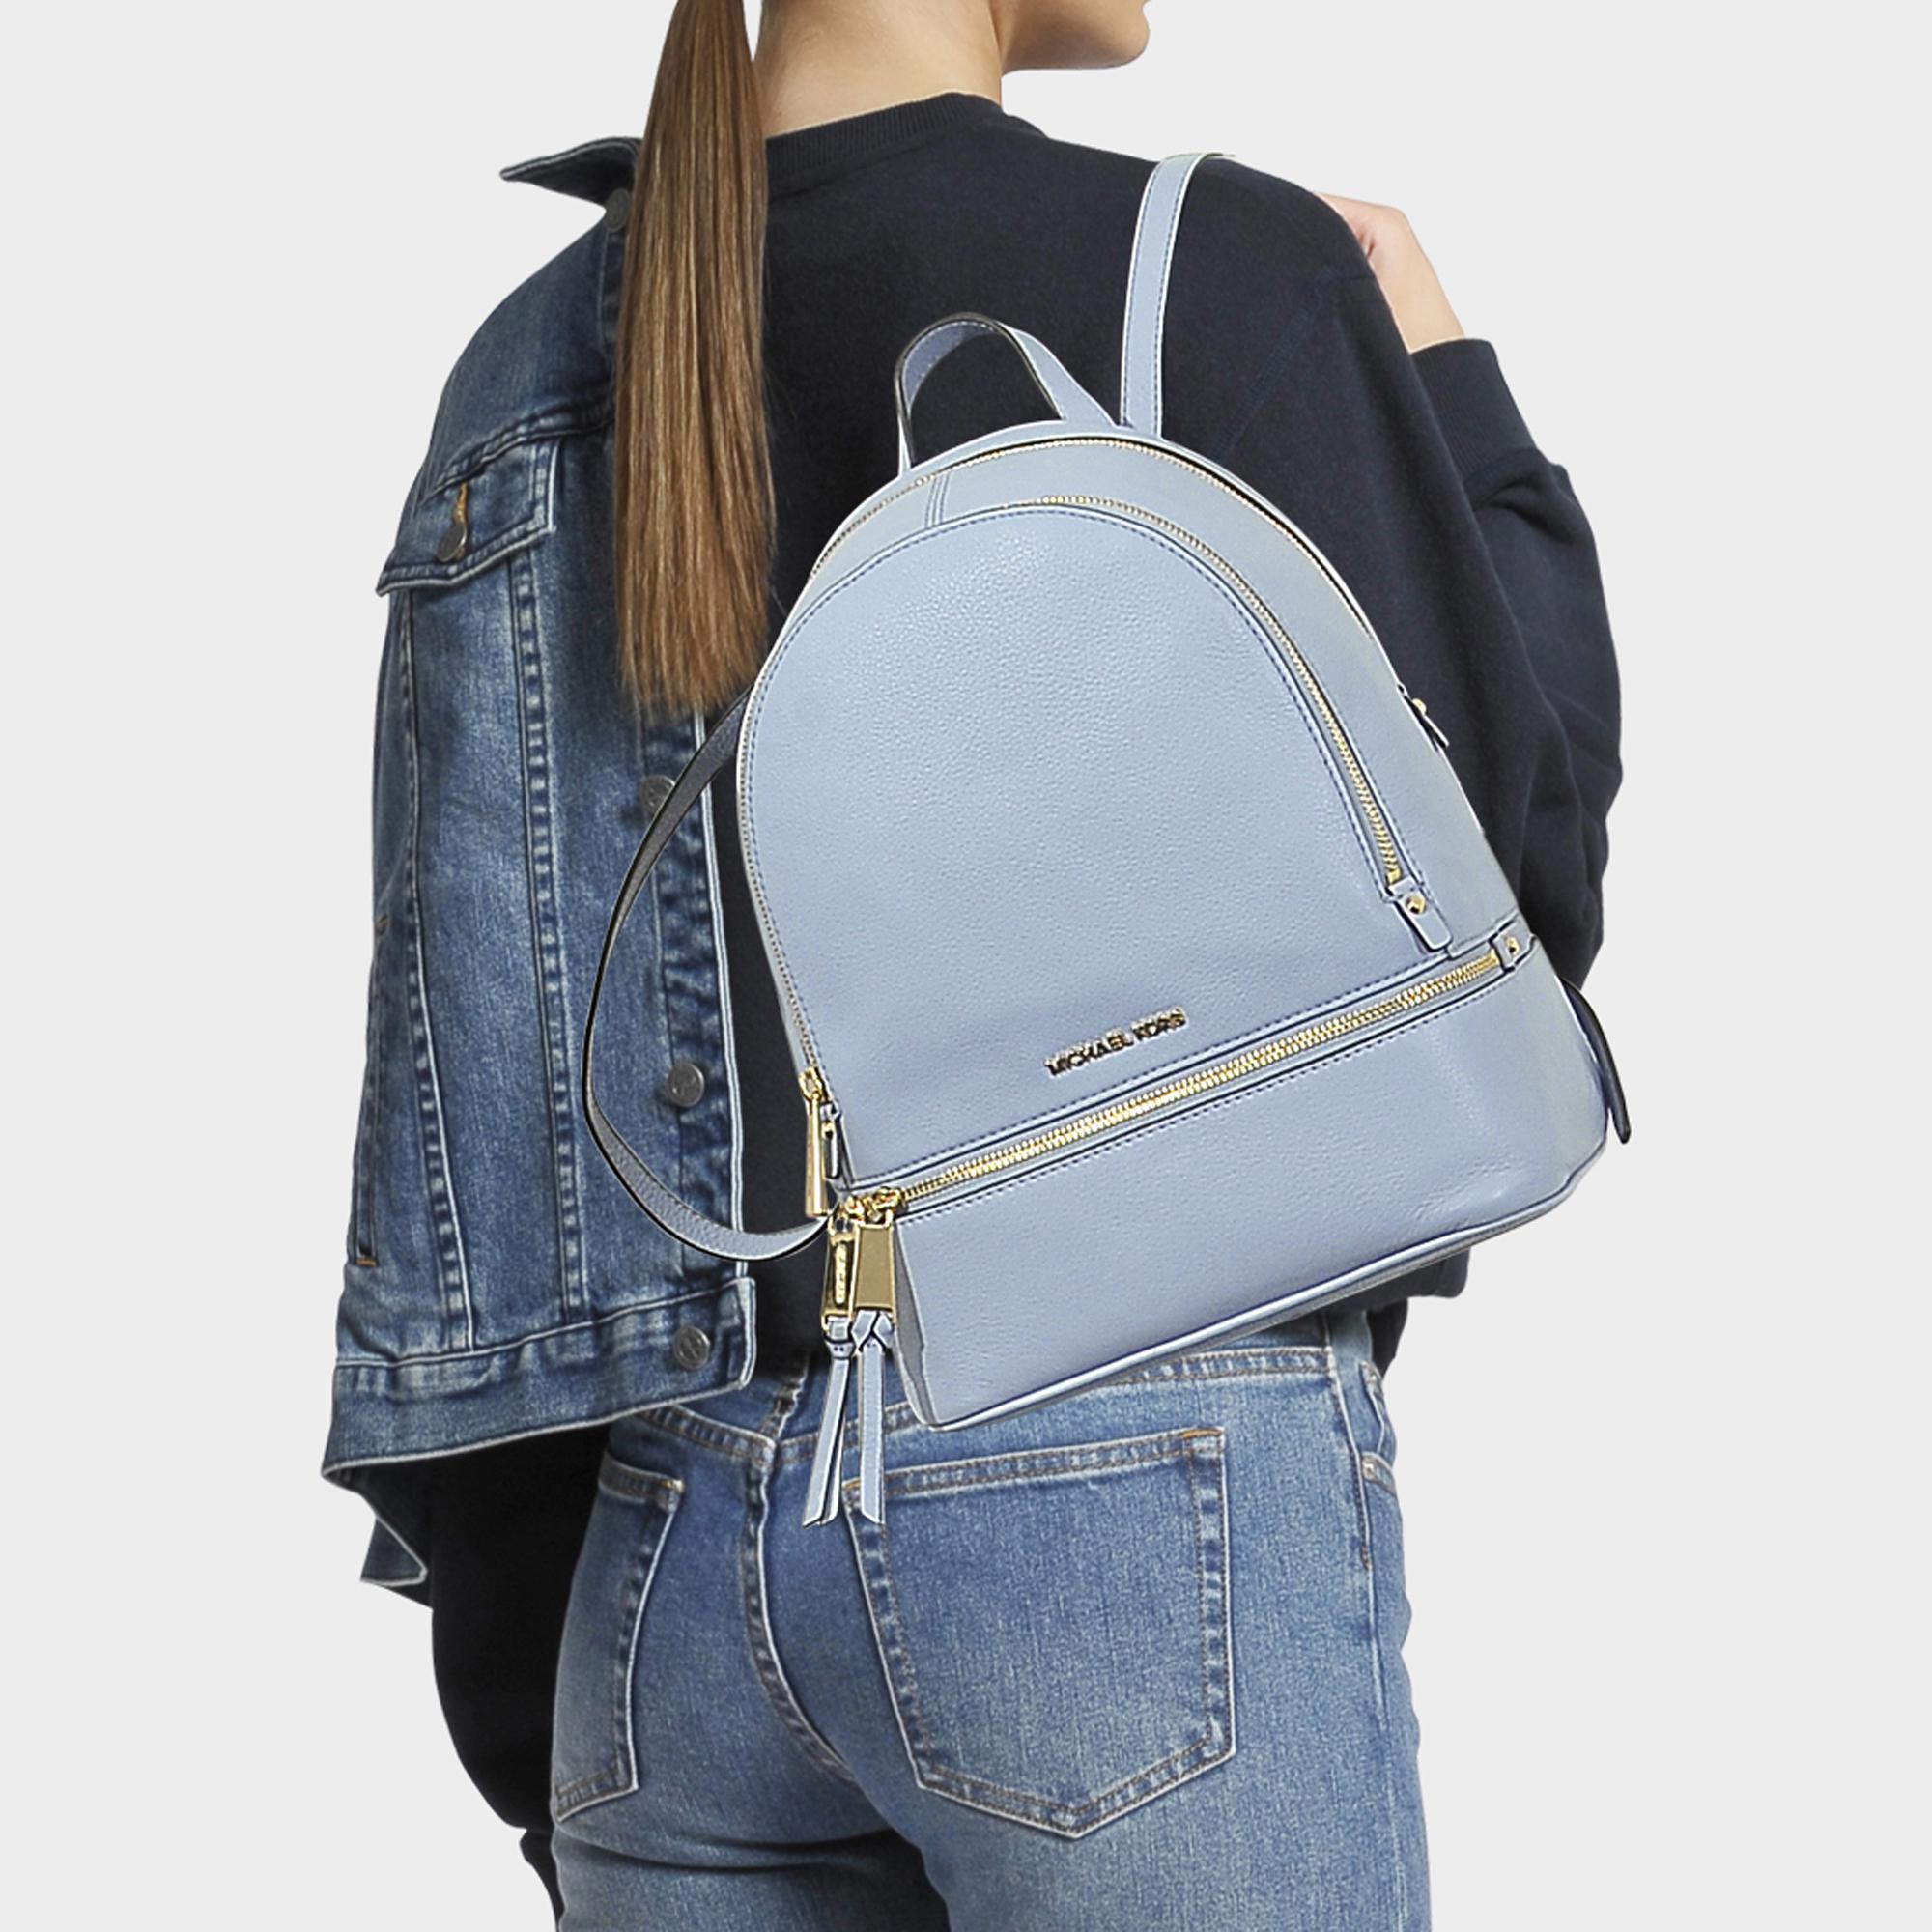 Michael Kors - Rhea Zip Medium Backpack